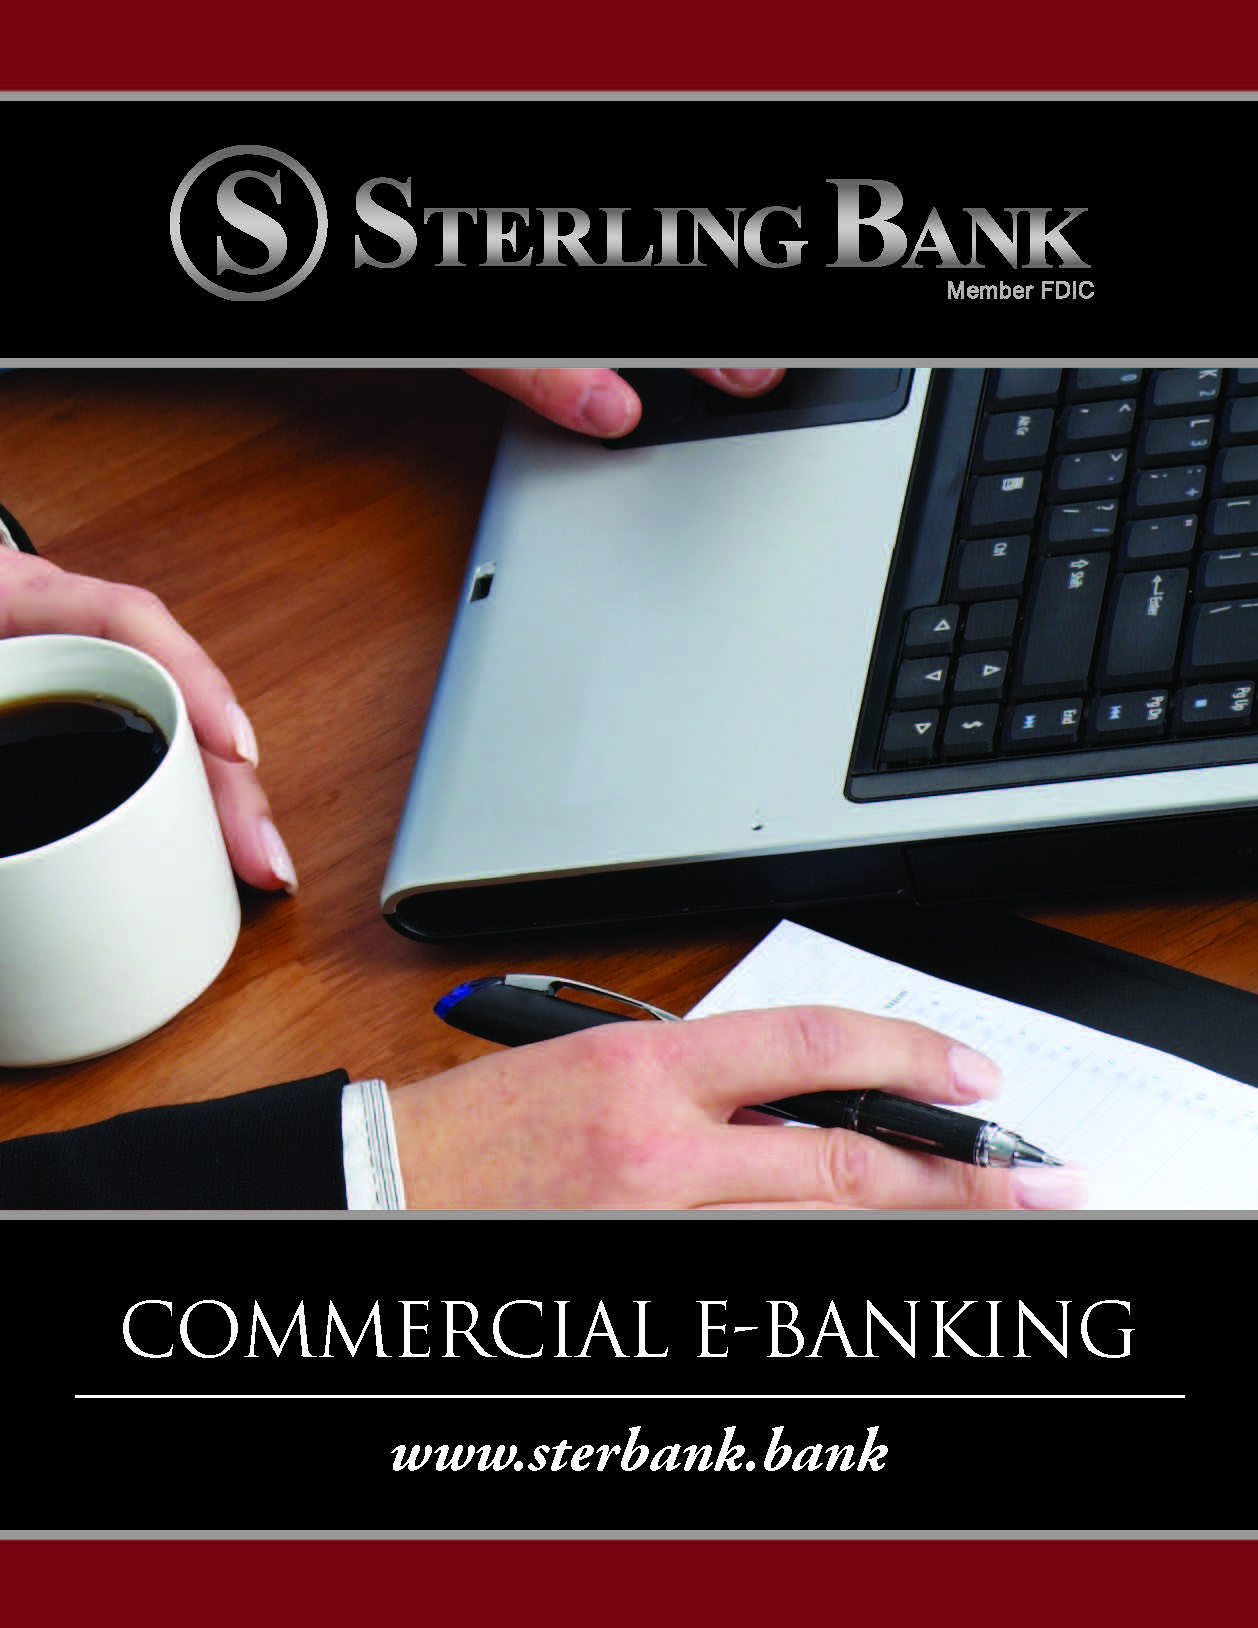 Commercial E-Banking Brochure